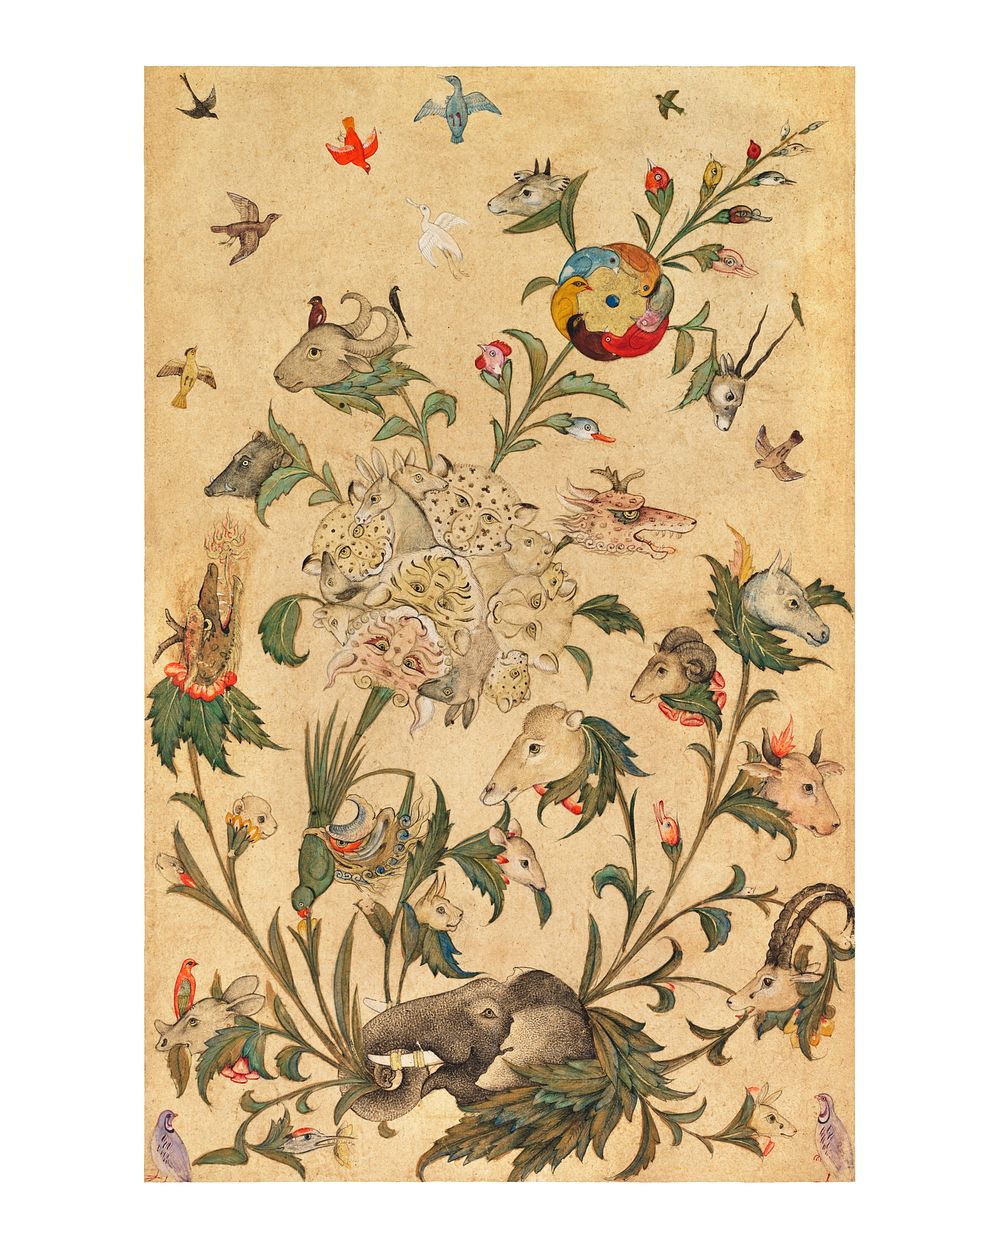 Animals flowers art print, vintage " A floral fantasy of animals and birds", digitally enhanced public domain artwork